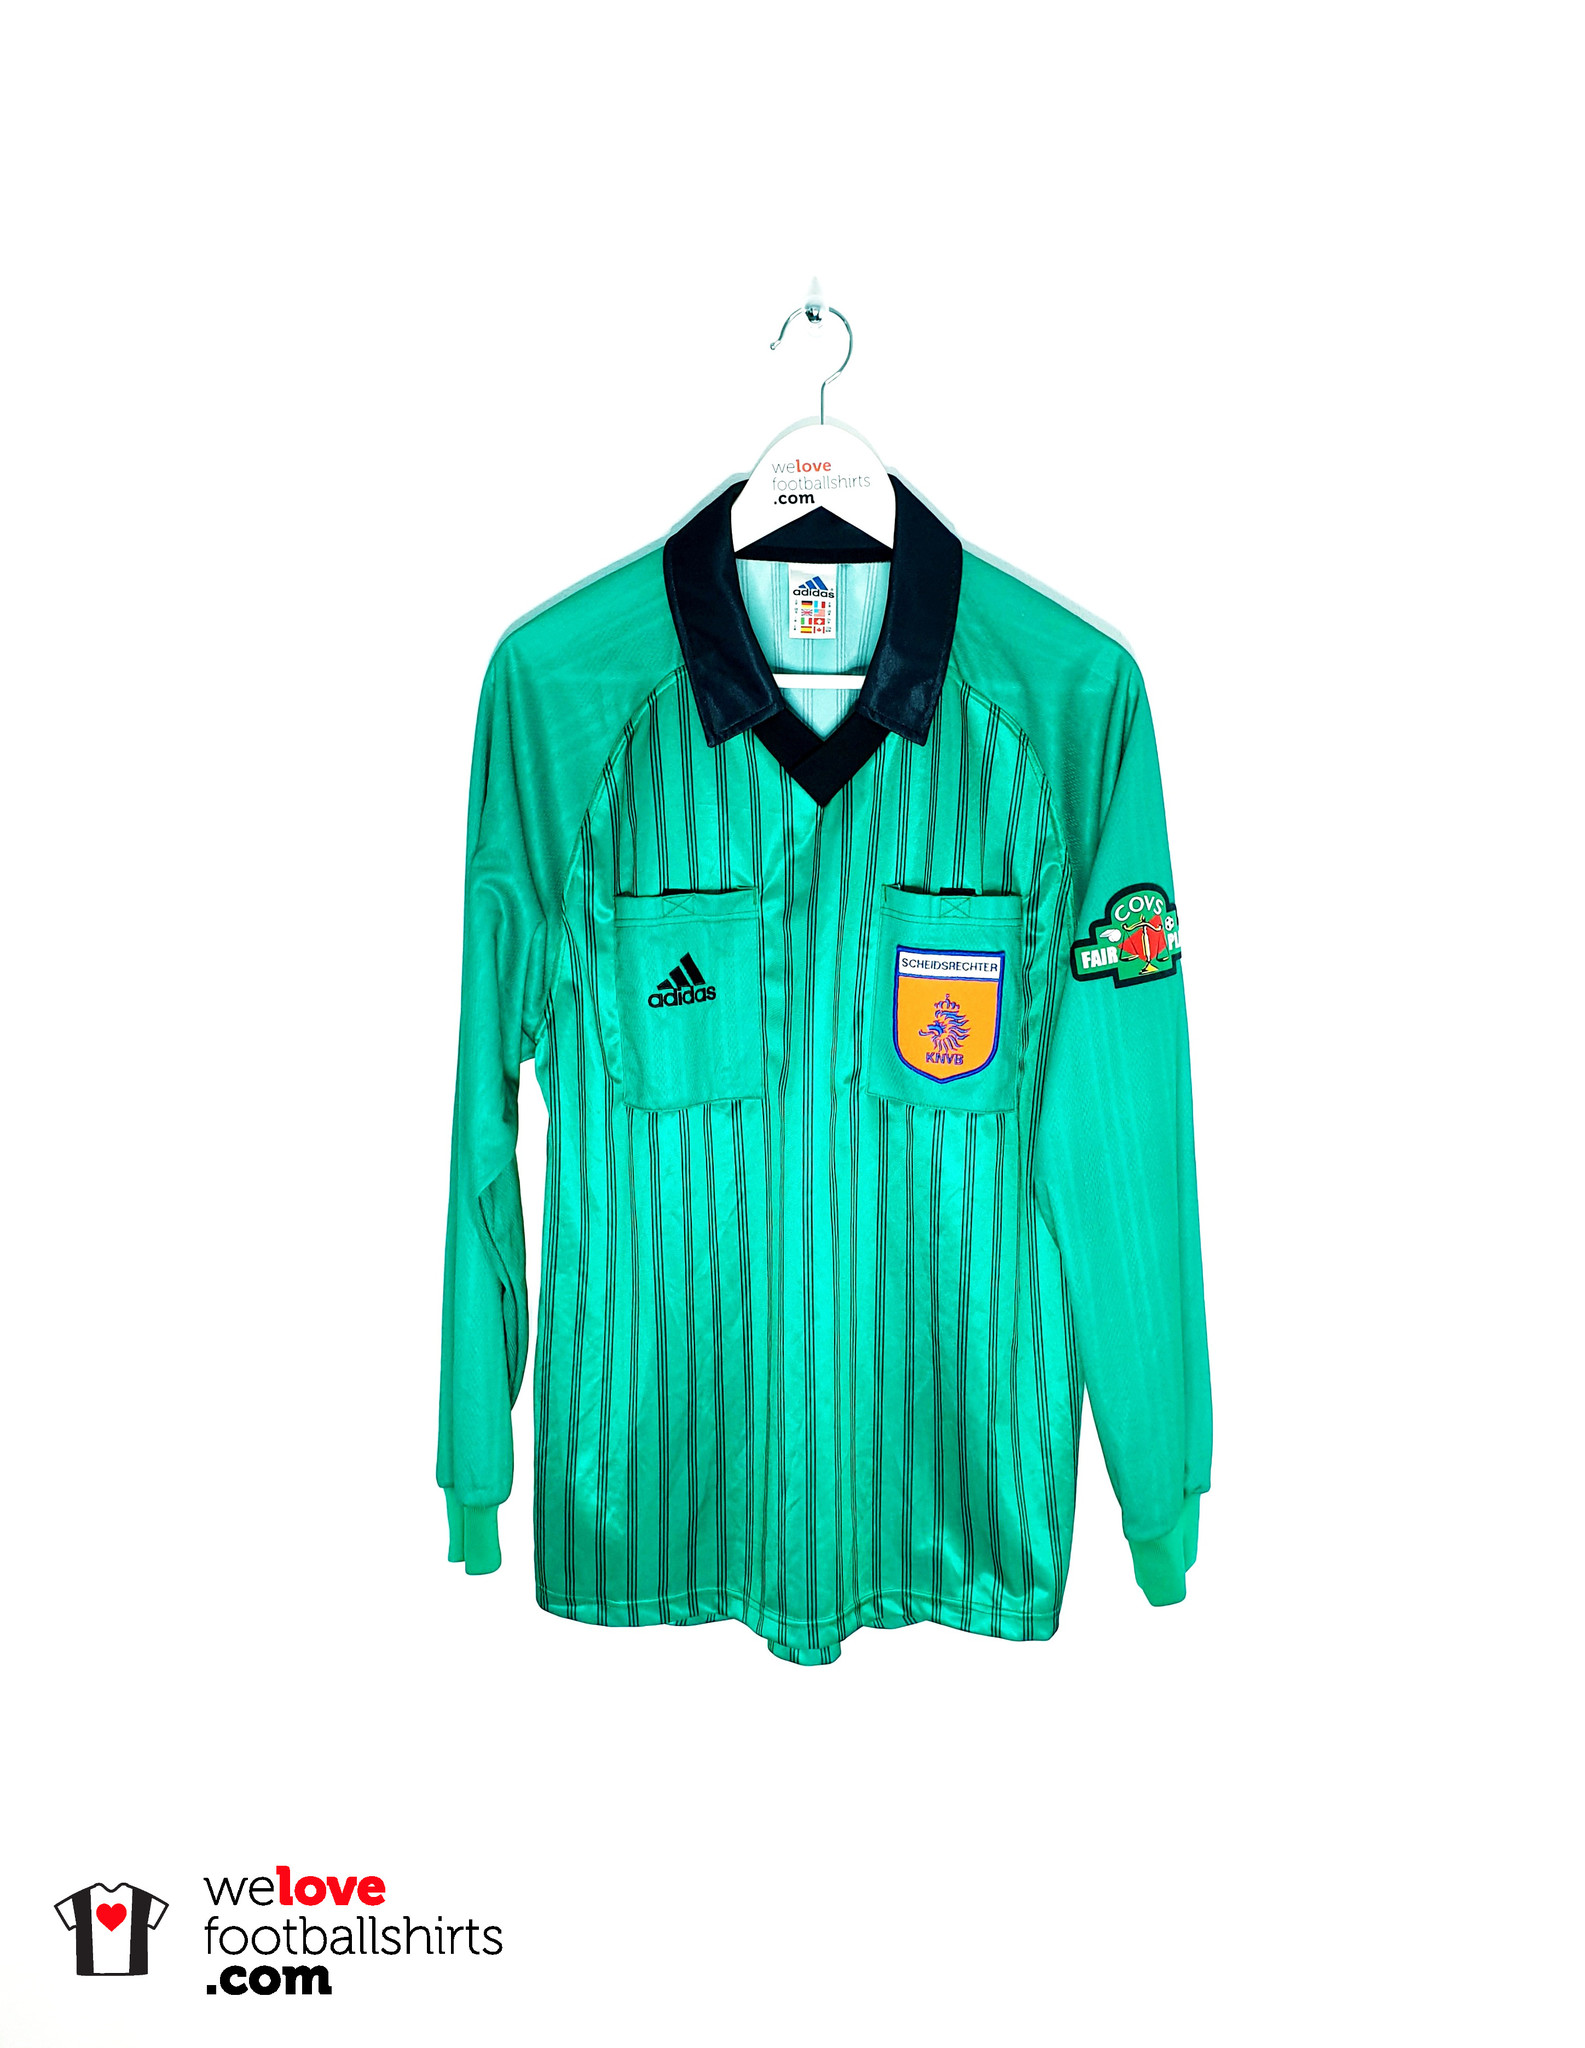 Adidas football referee kit KNVB 90s - Welovefootballshirts.com